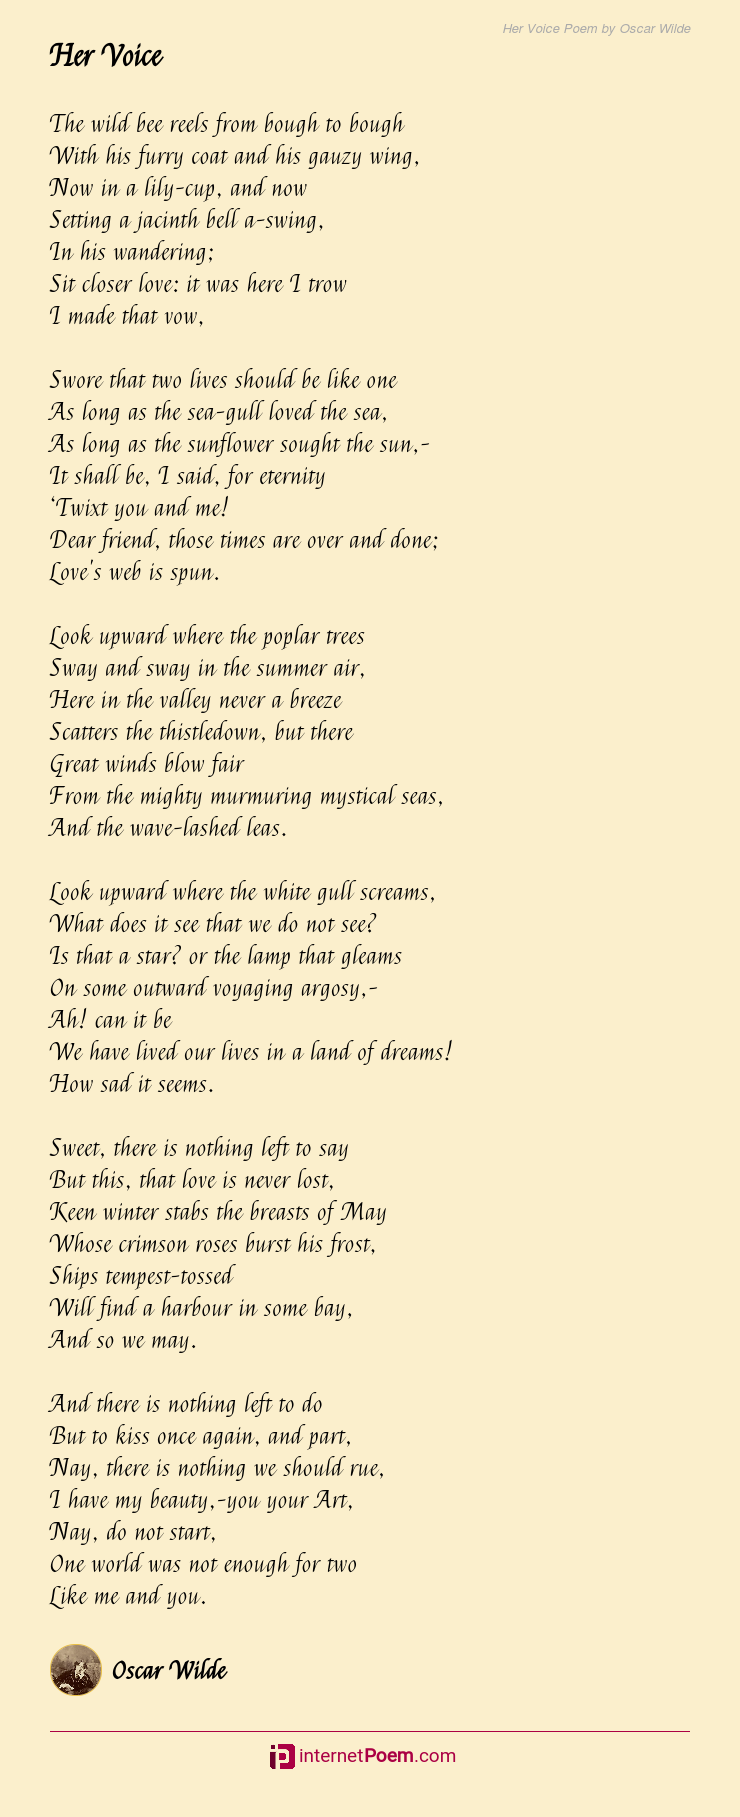 Her Voice Poem by Oscar Wilde